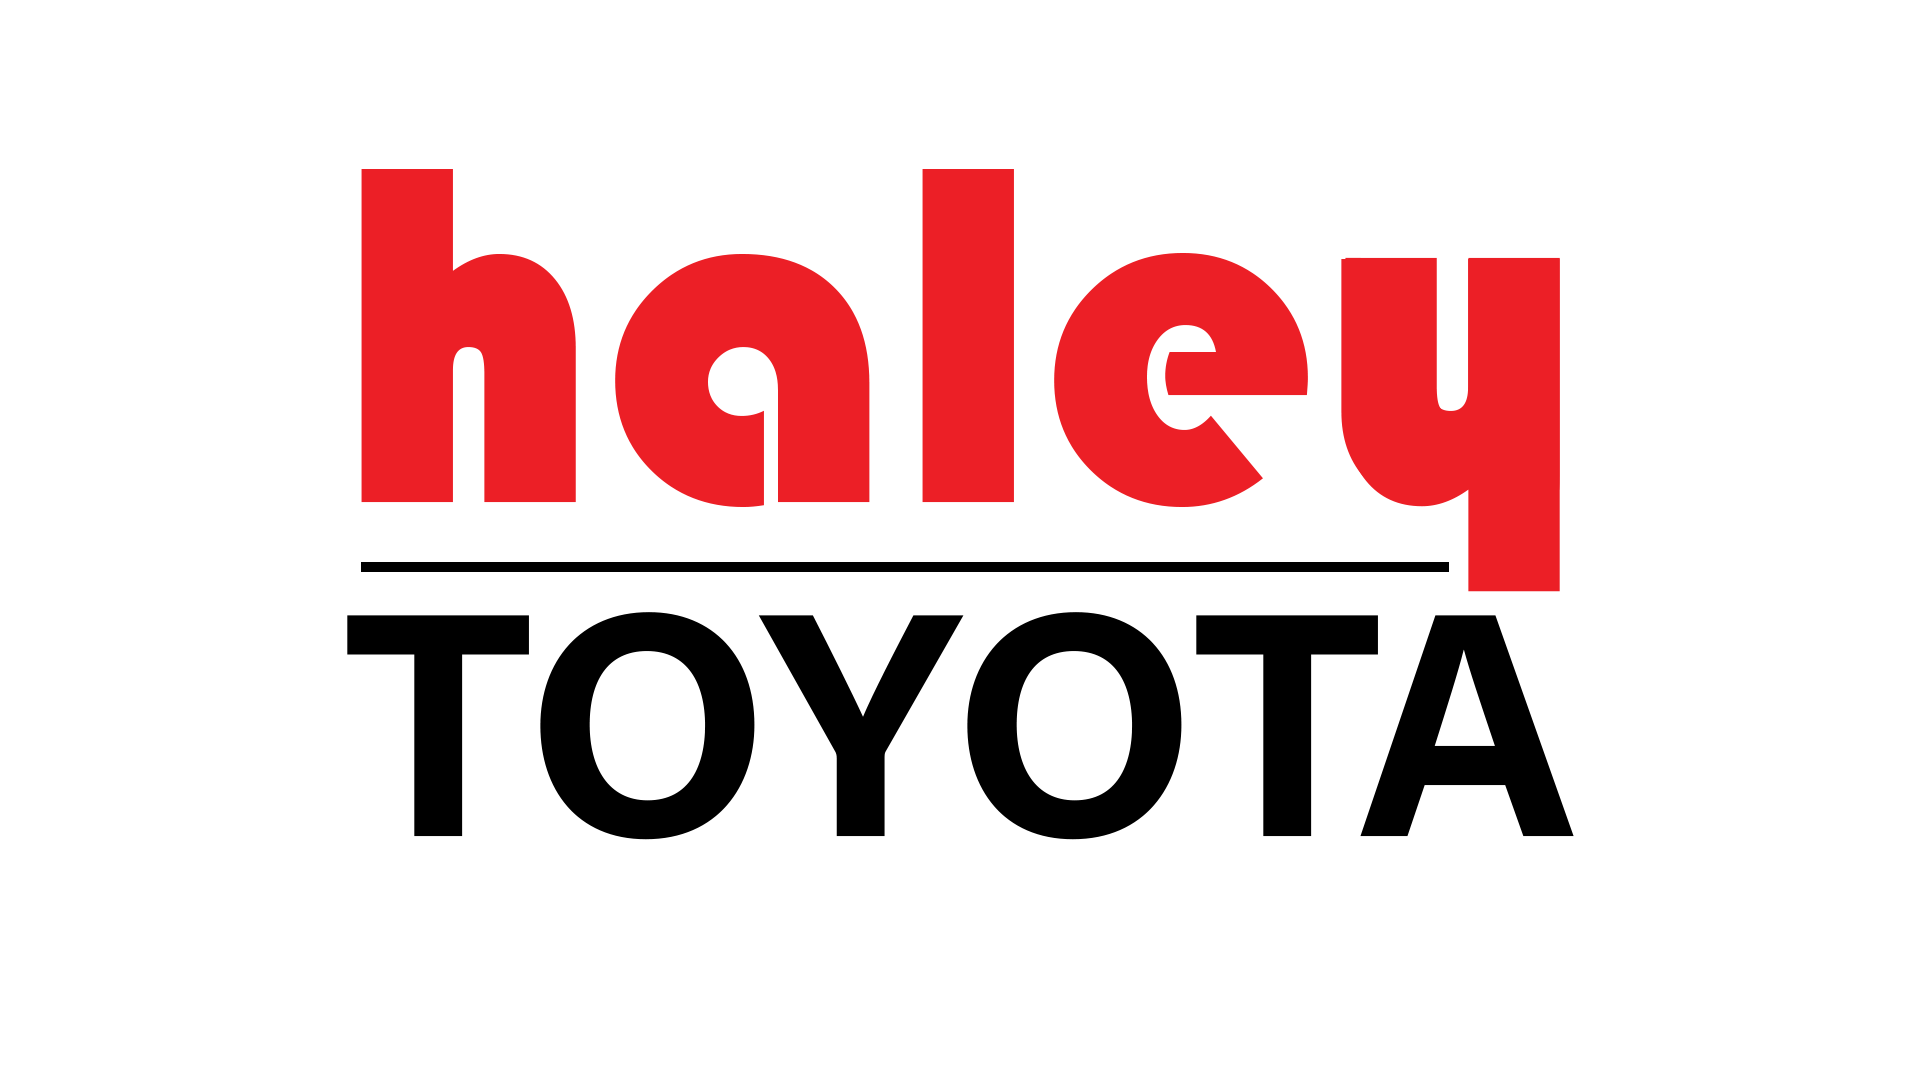 Haley Toyota